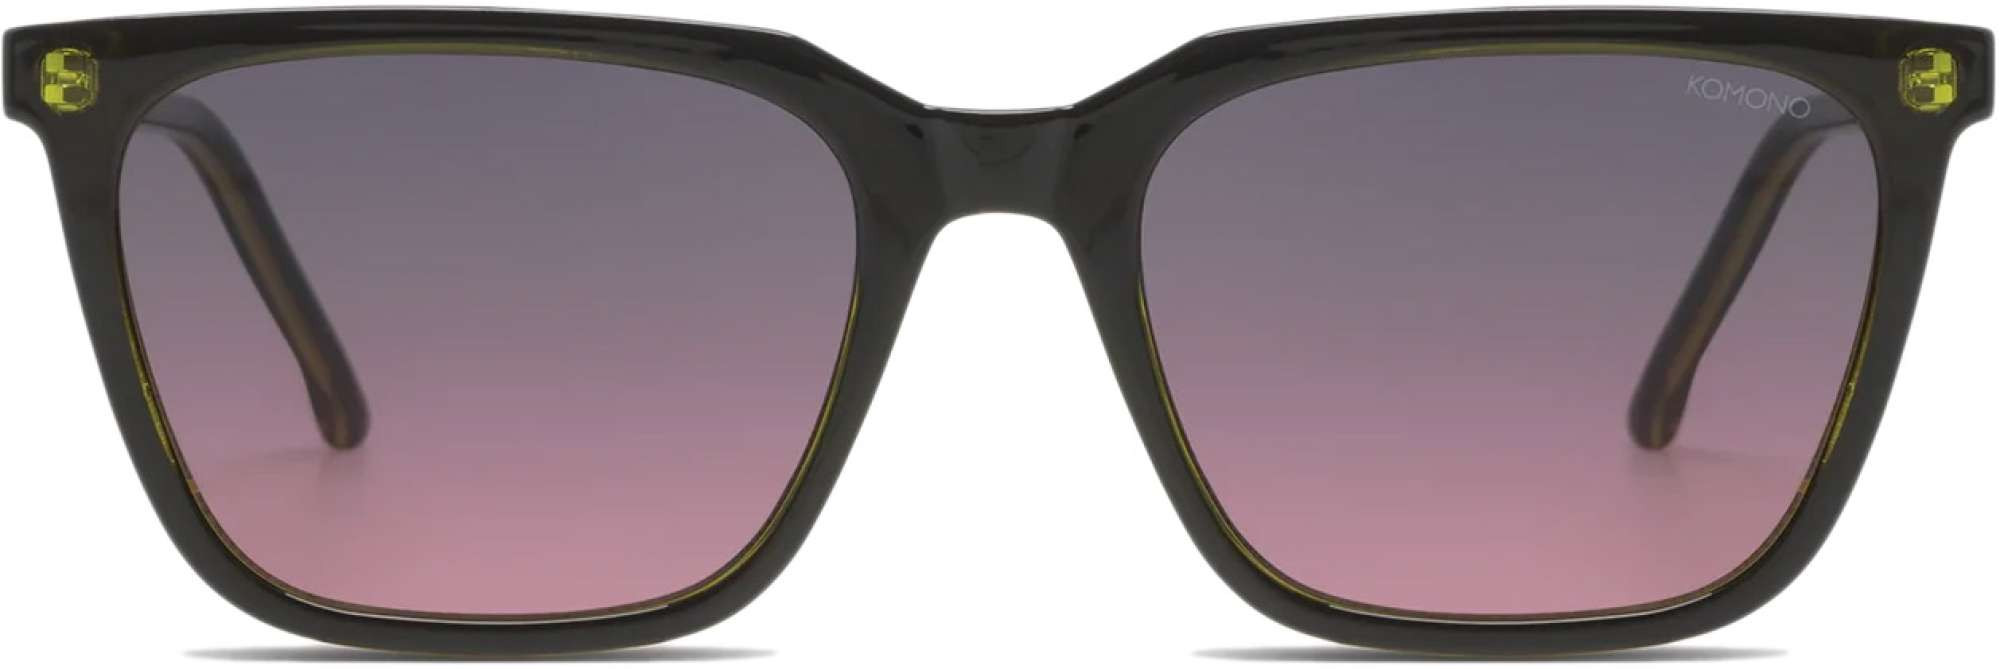 Afbeelding van Komono Jay sunglasses matrix